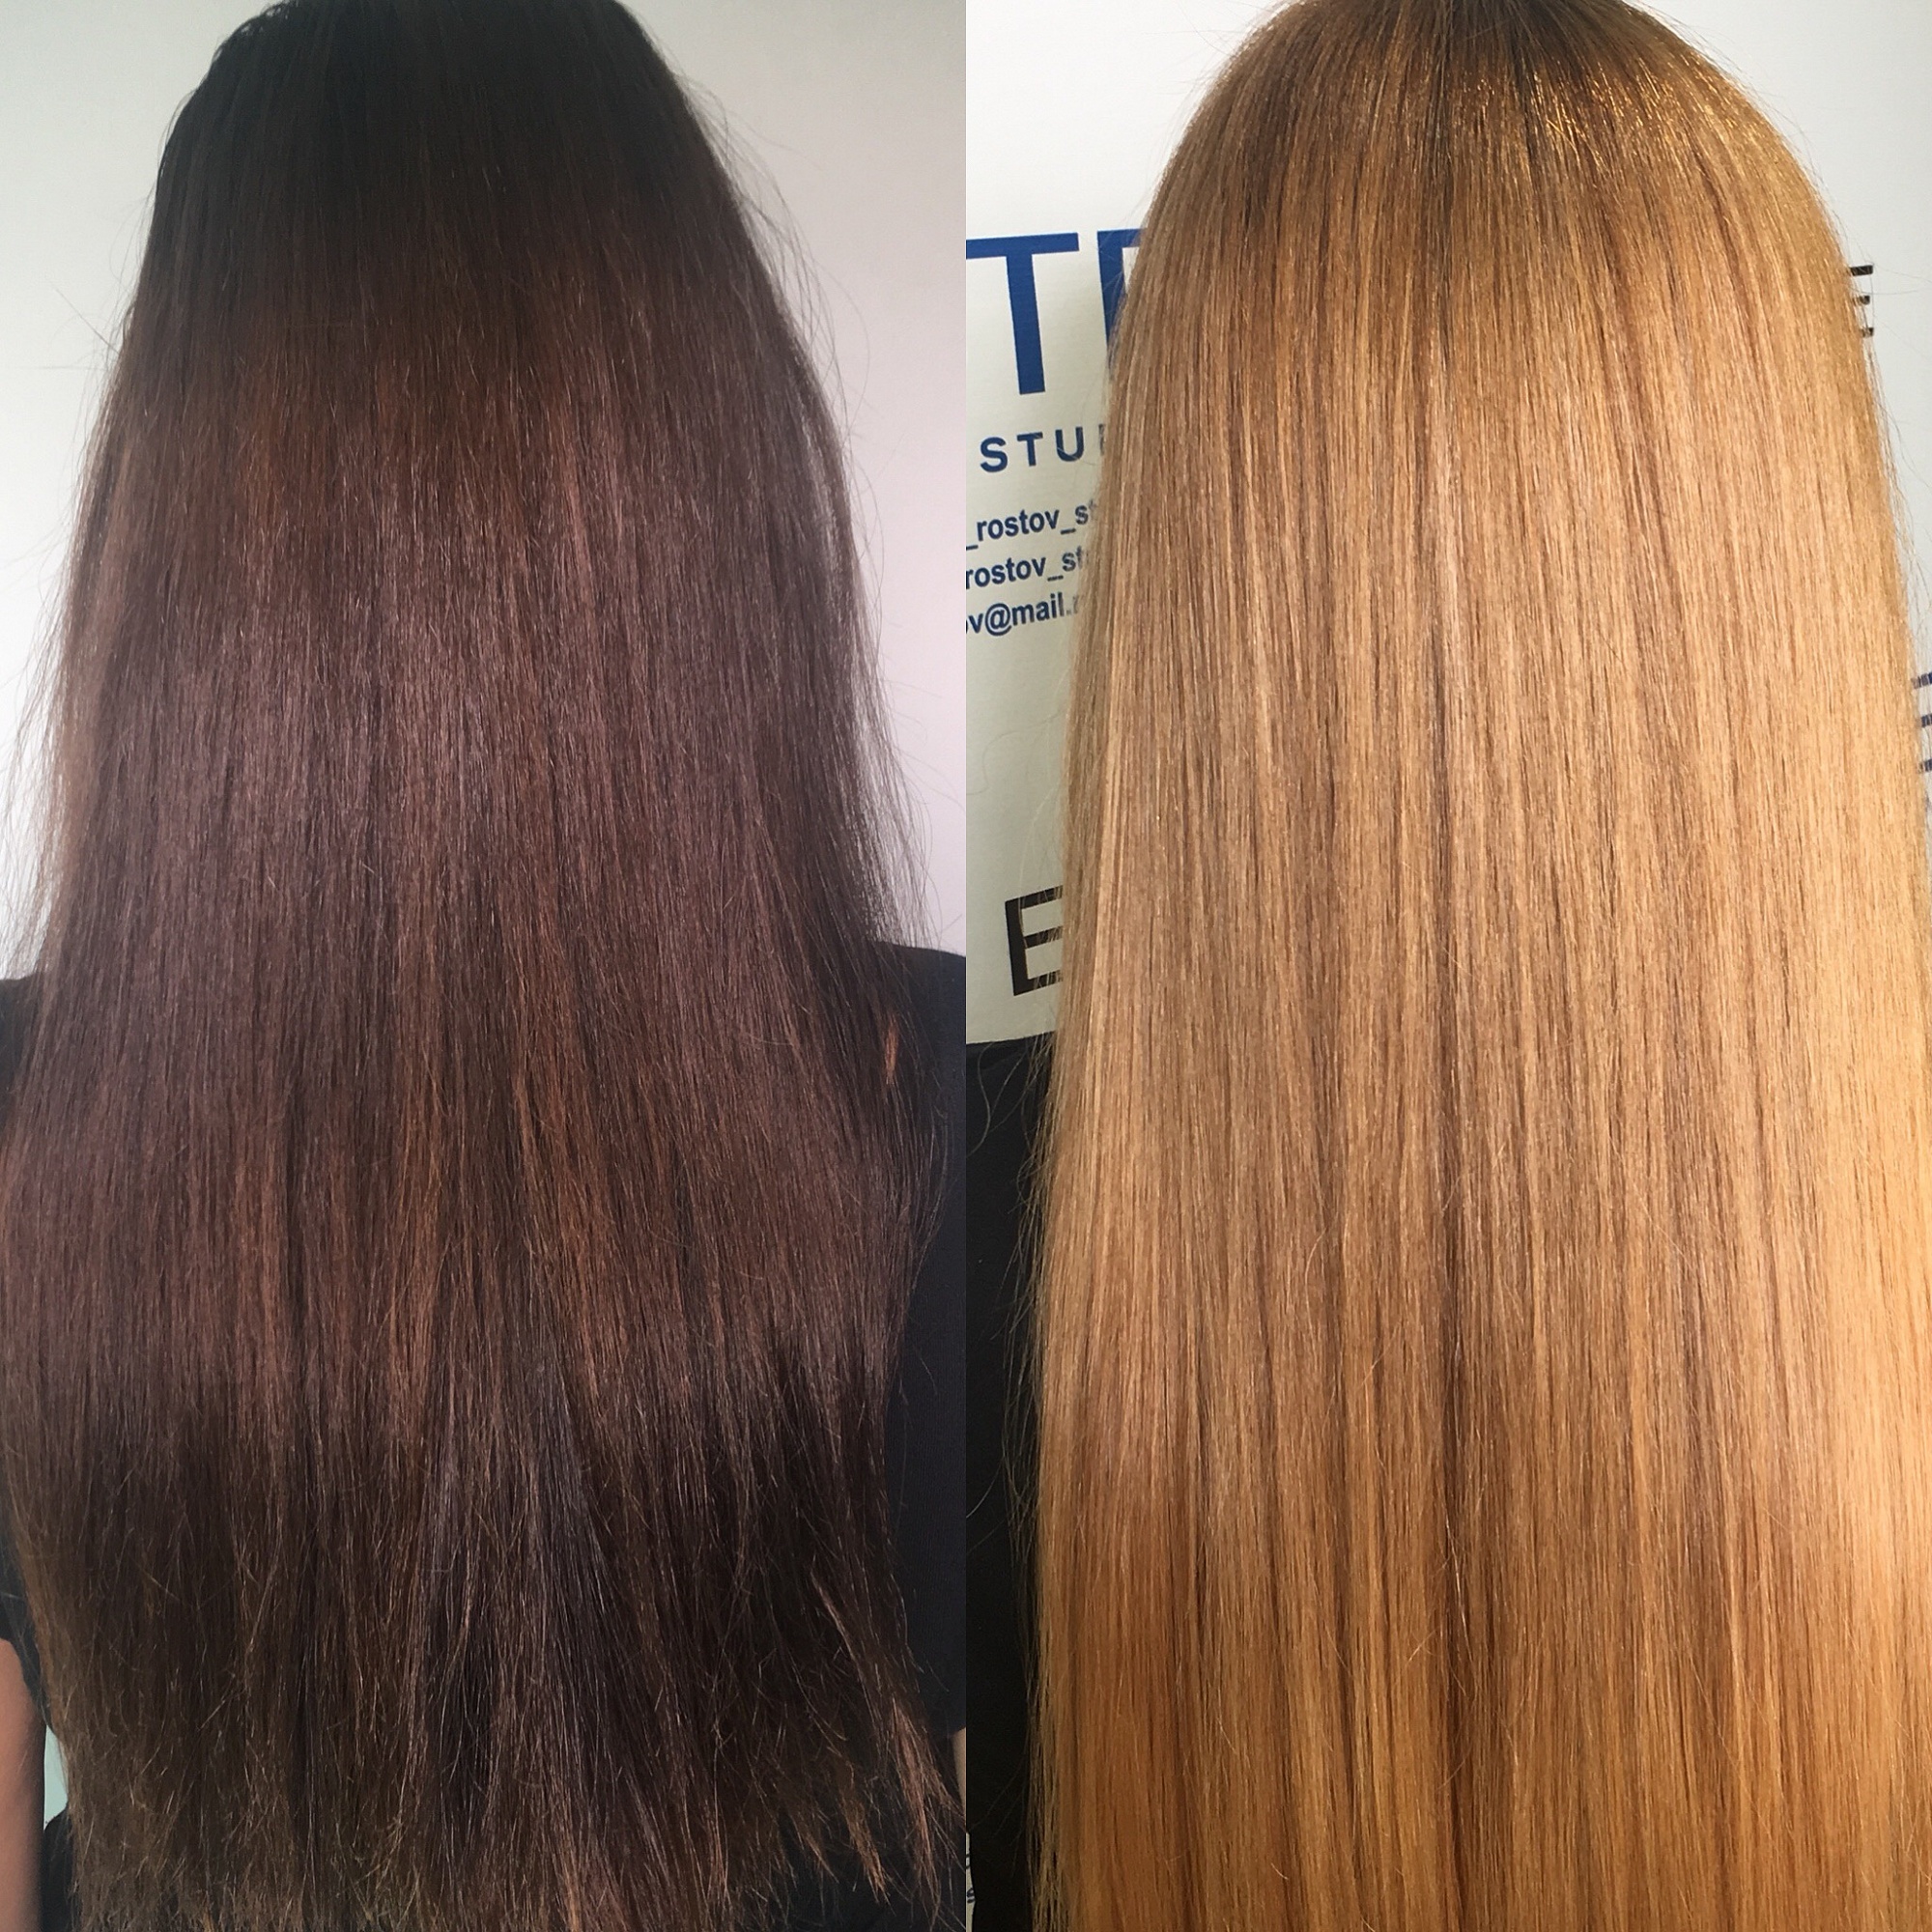 колор волос фото до и после